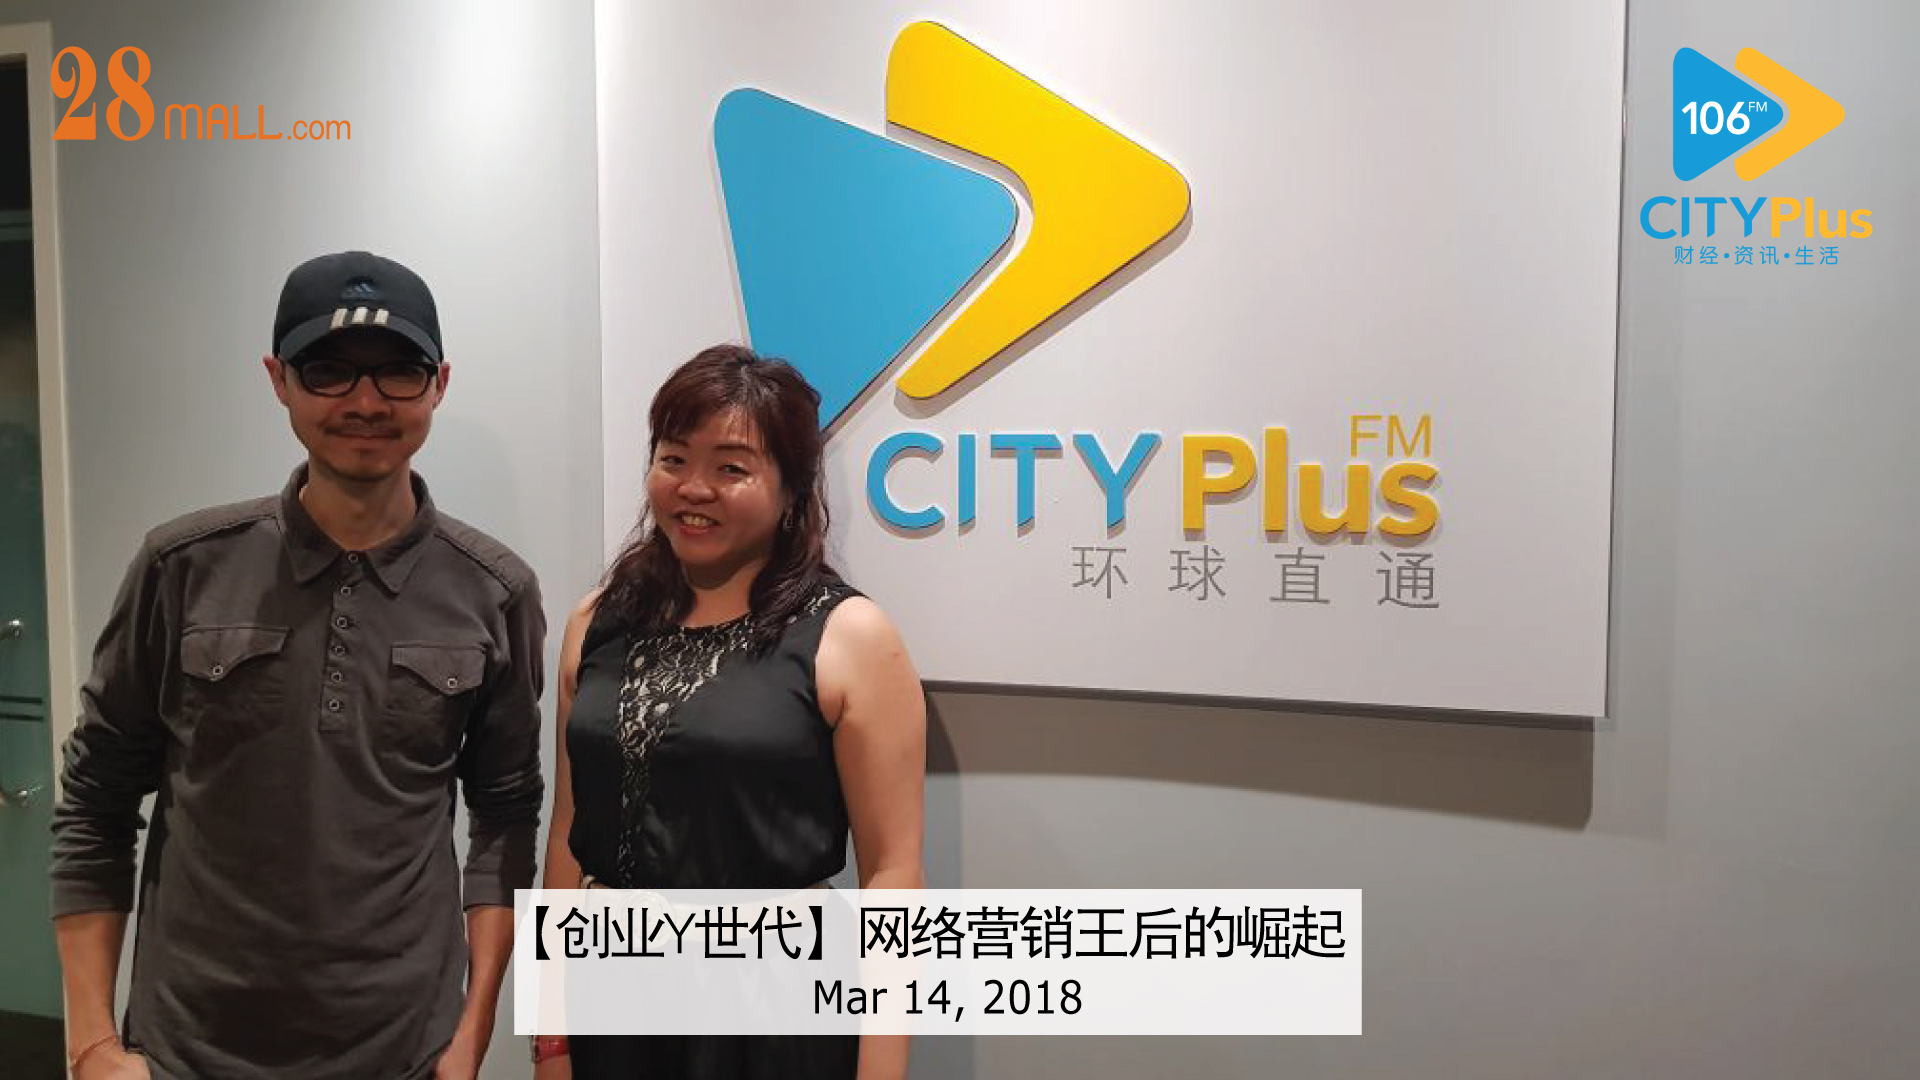 【创业Y世代】网络营销王后的崛起 Conversation Personality interview at CITYPlus FM